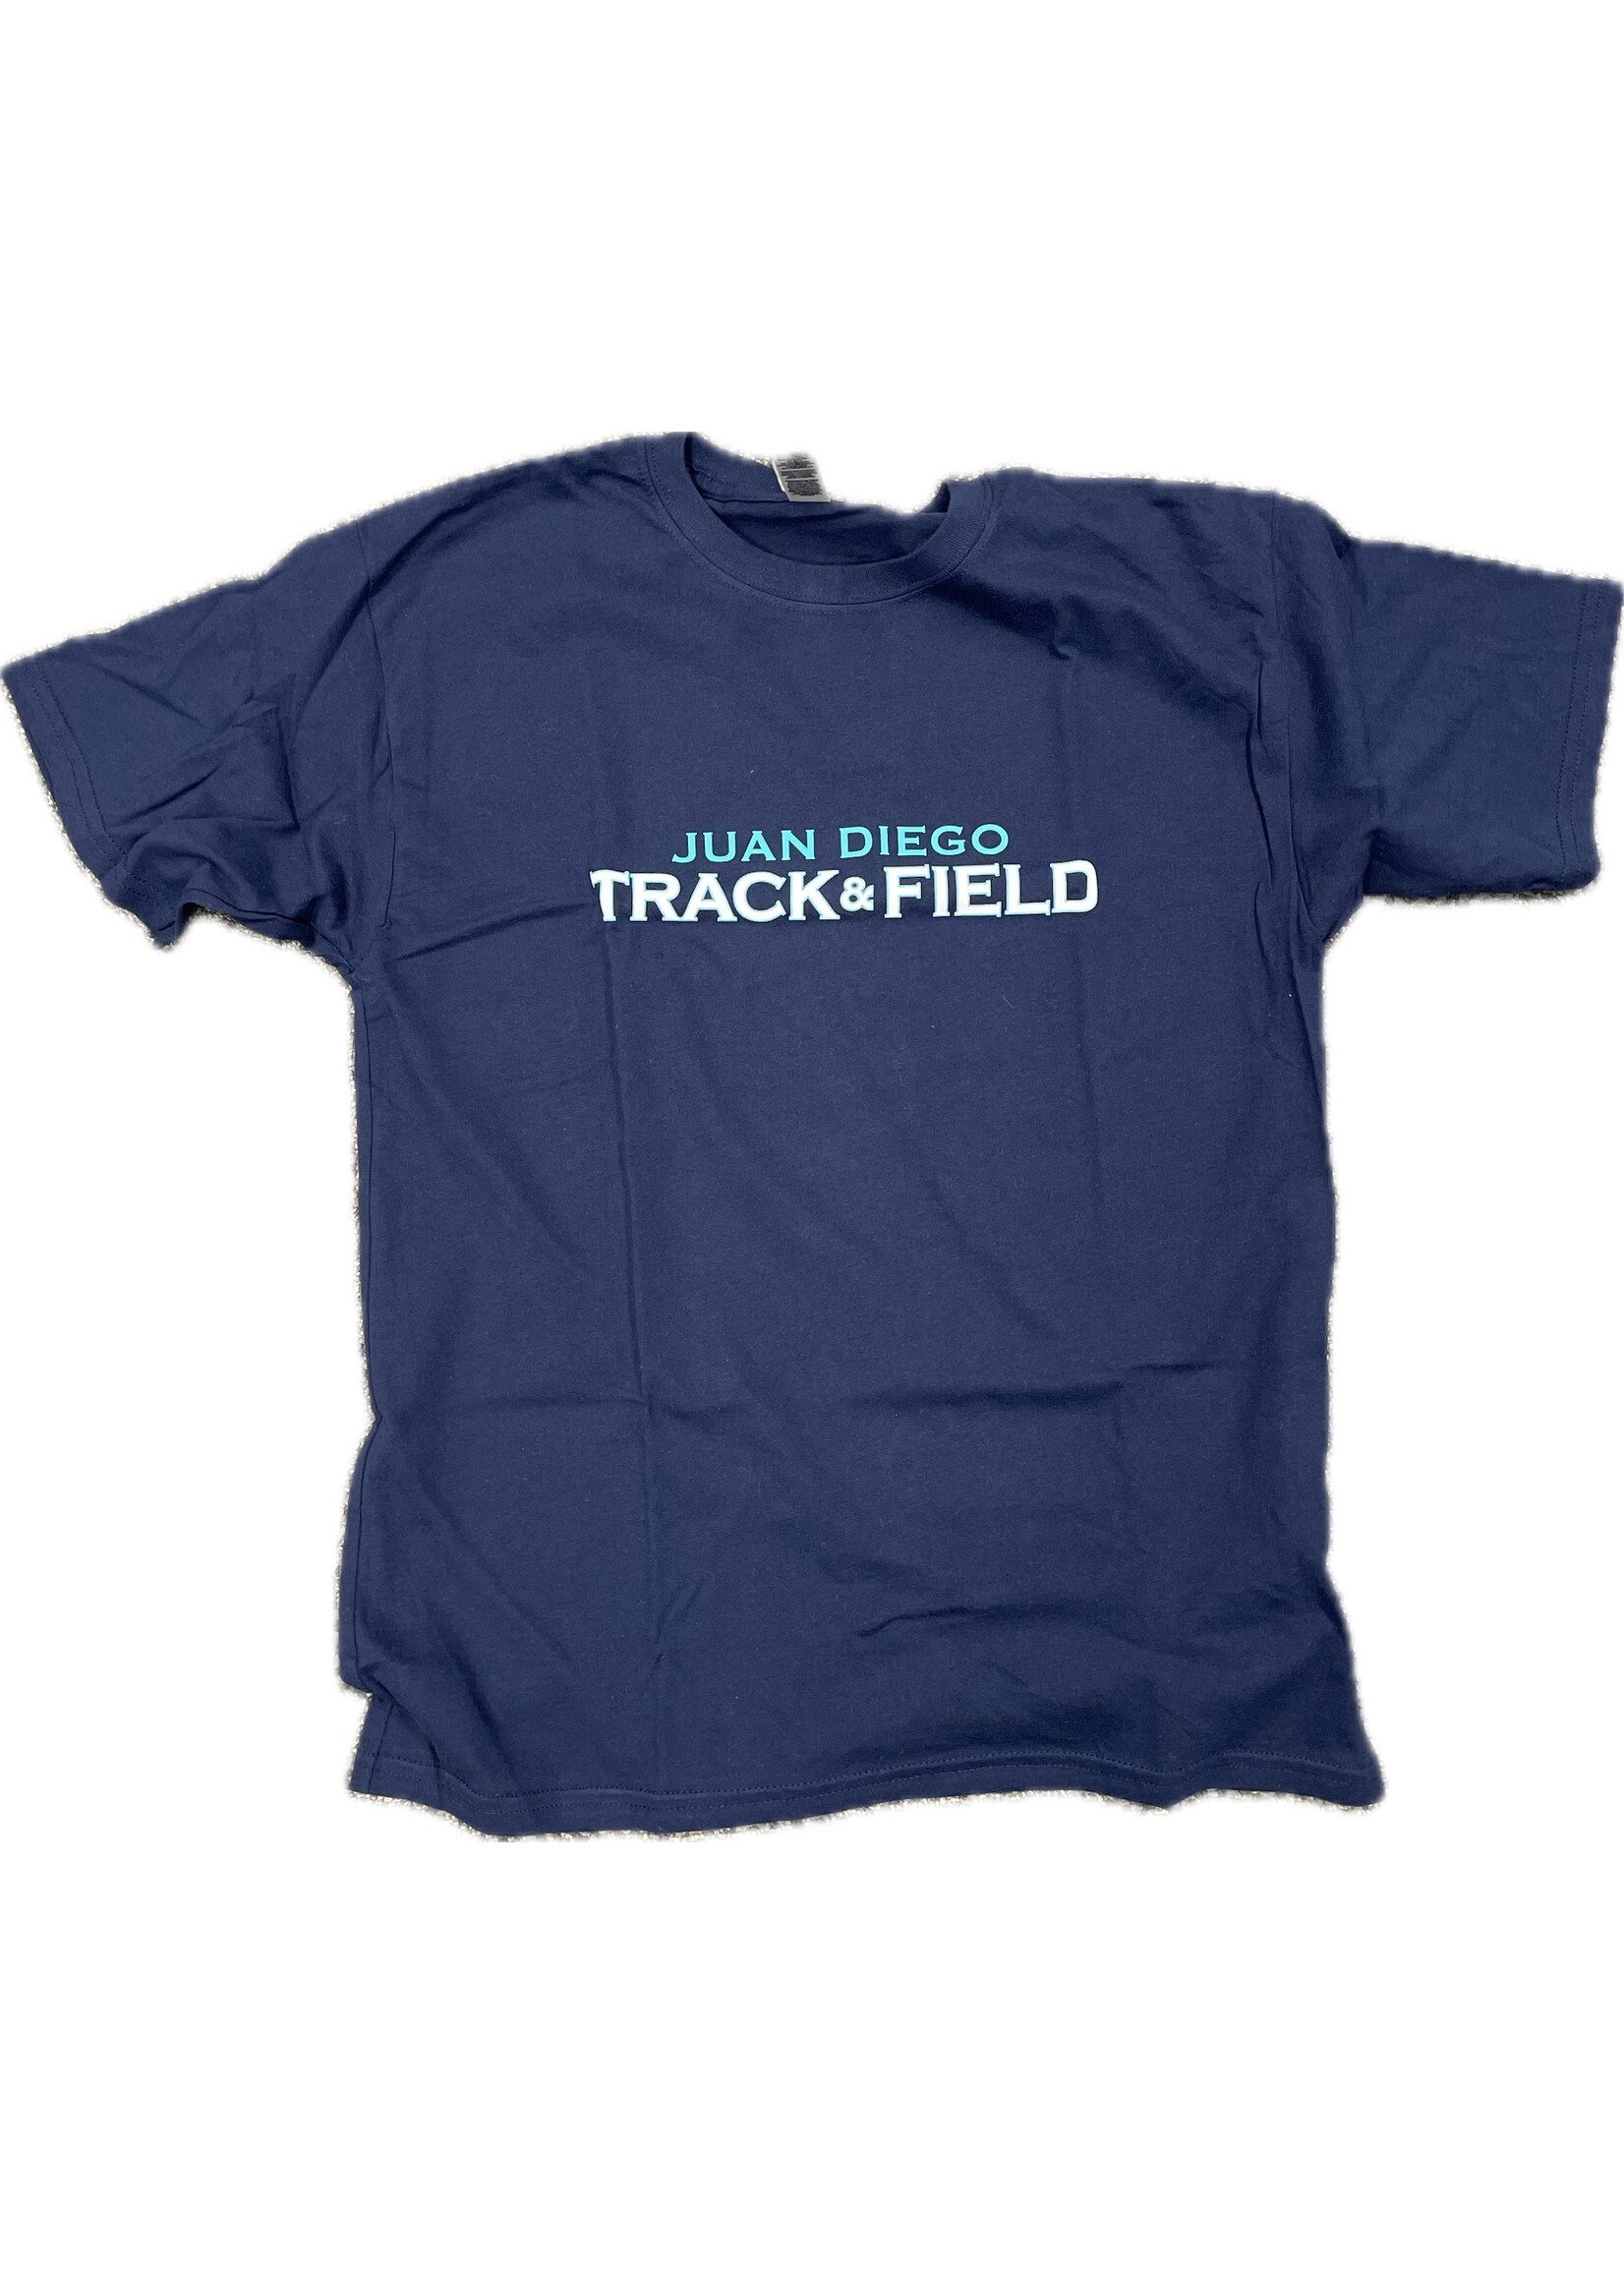 NON-UNIFORM Track & Field, Juan Diego Track & Field  Unisex s/s t-shirt